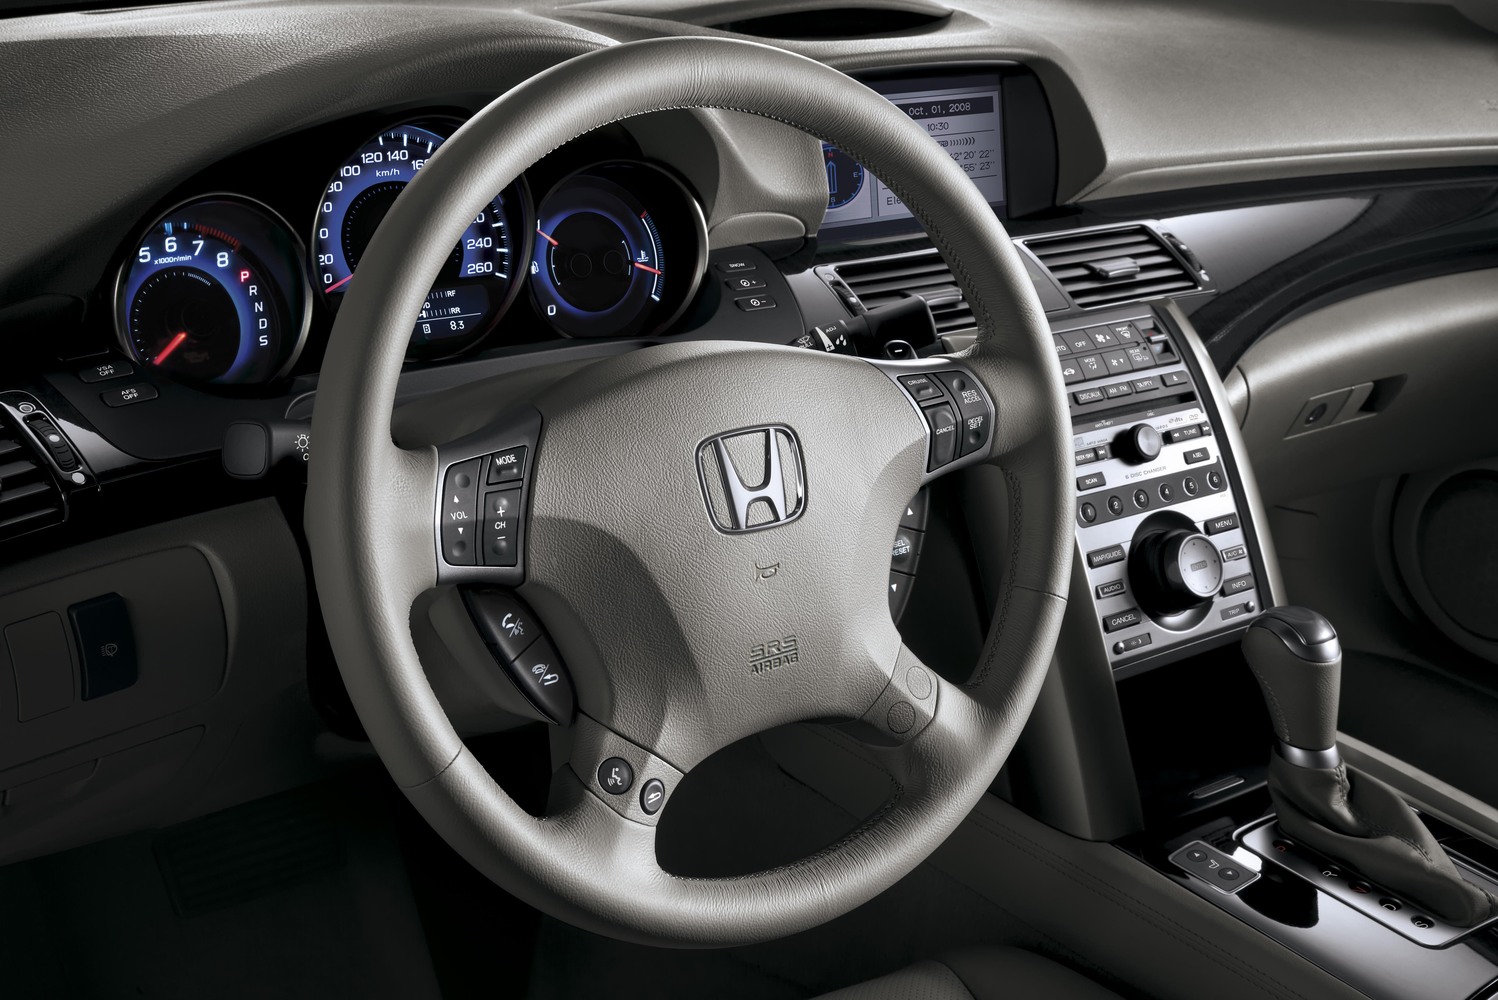 седан Honda Legend 2008 - 2011г выпуска модификация 3.7 VTEC 3.7 AT (295 л.с.) 4×4